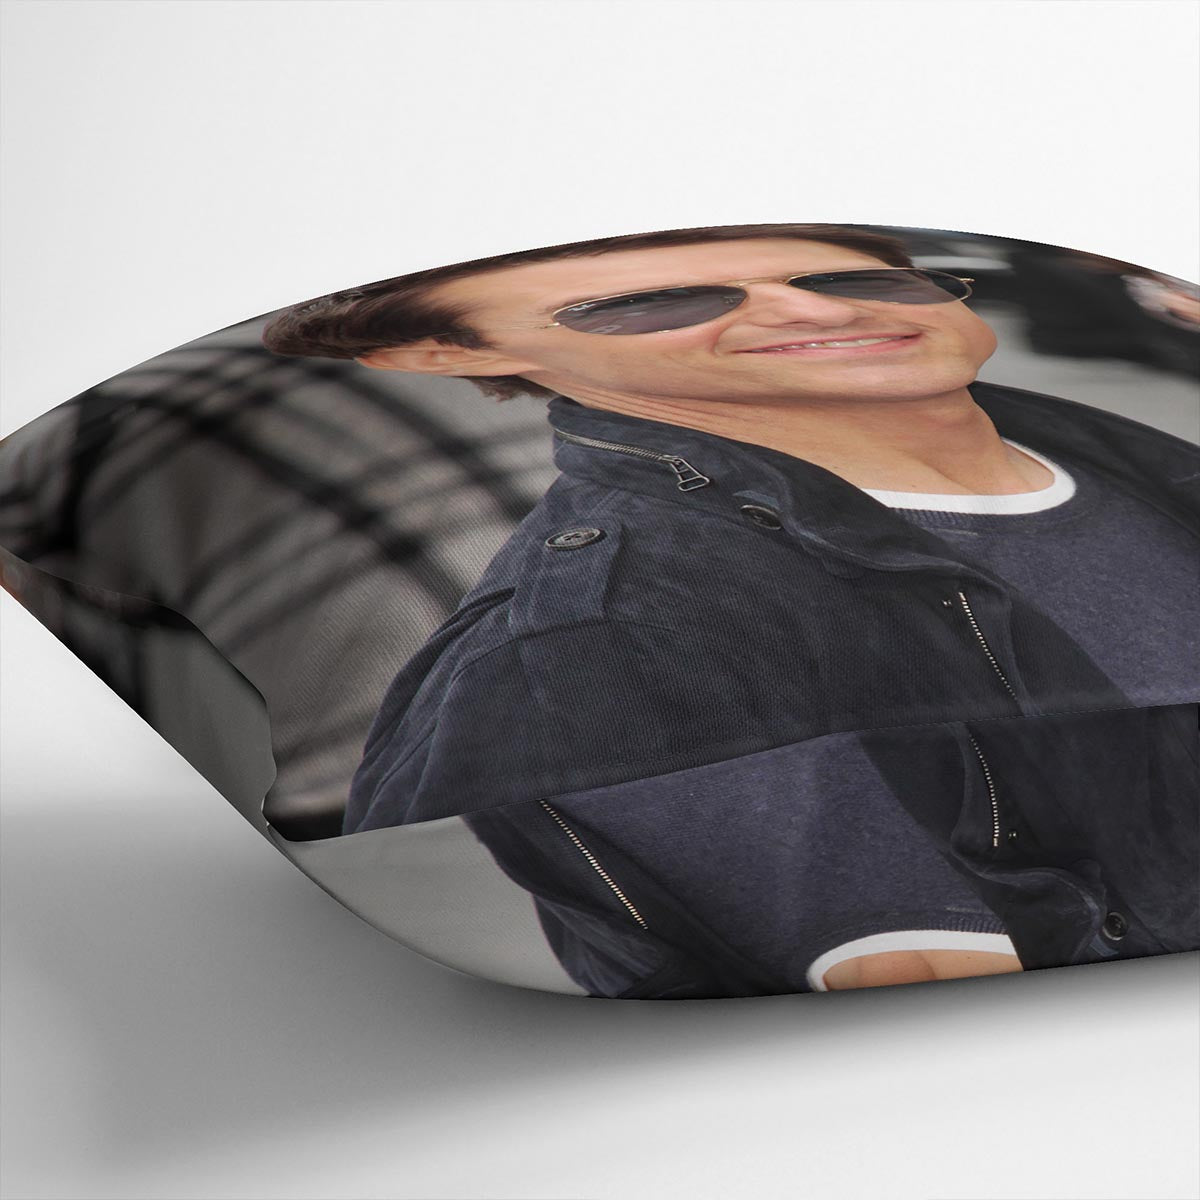 Tom Cruise in sunglasses Cushion